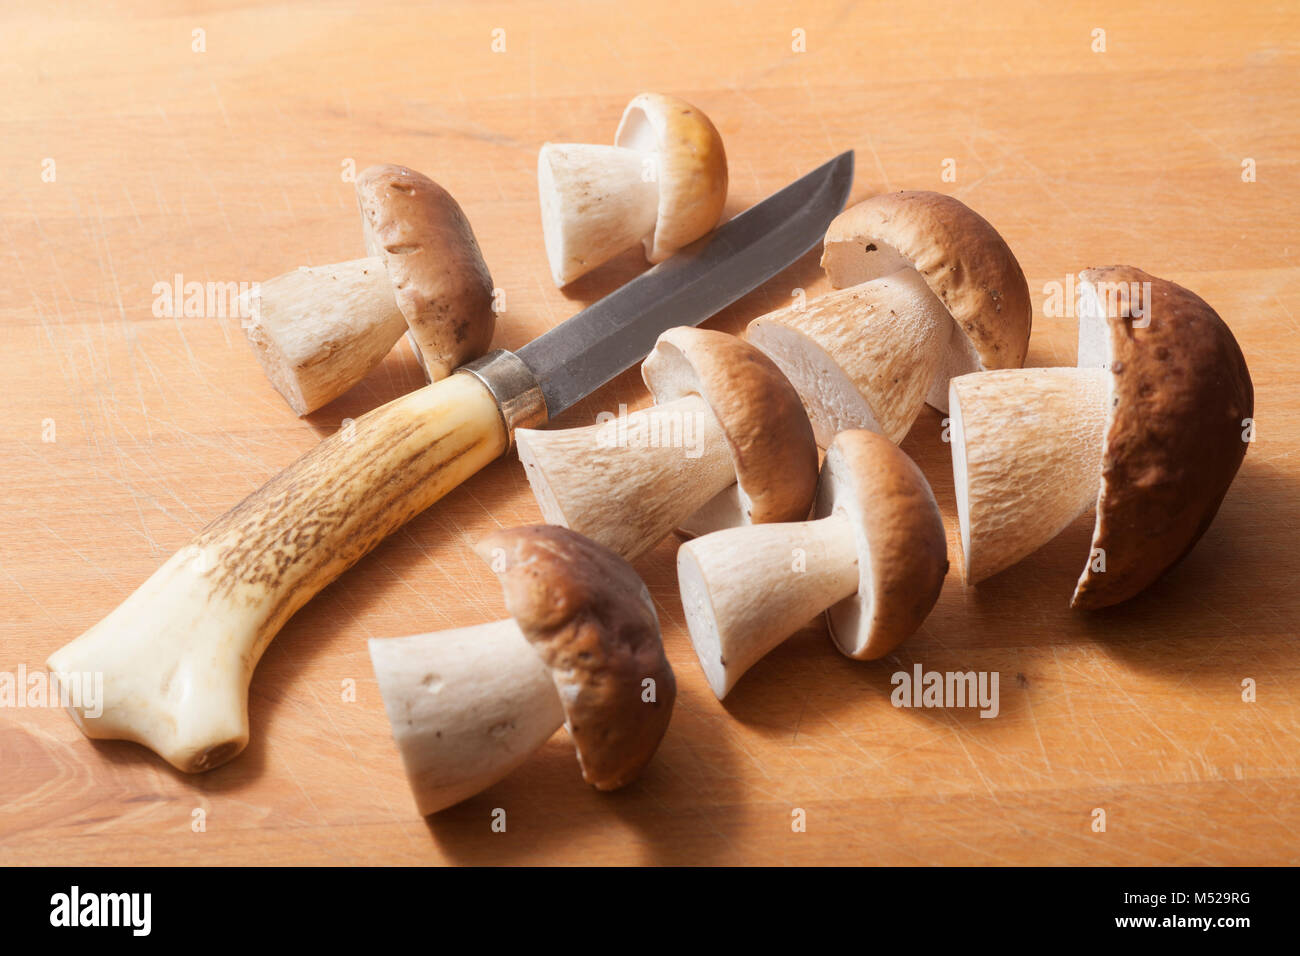 Cep or penny bun fungi, Boletus edulis, studio picture with homemade knife. Hampshire England UK GB Stock Photo